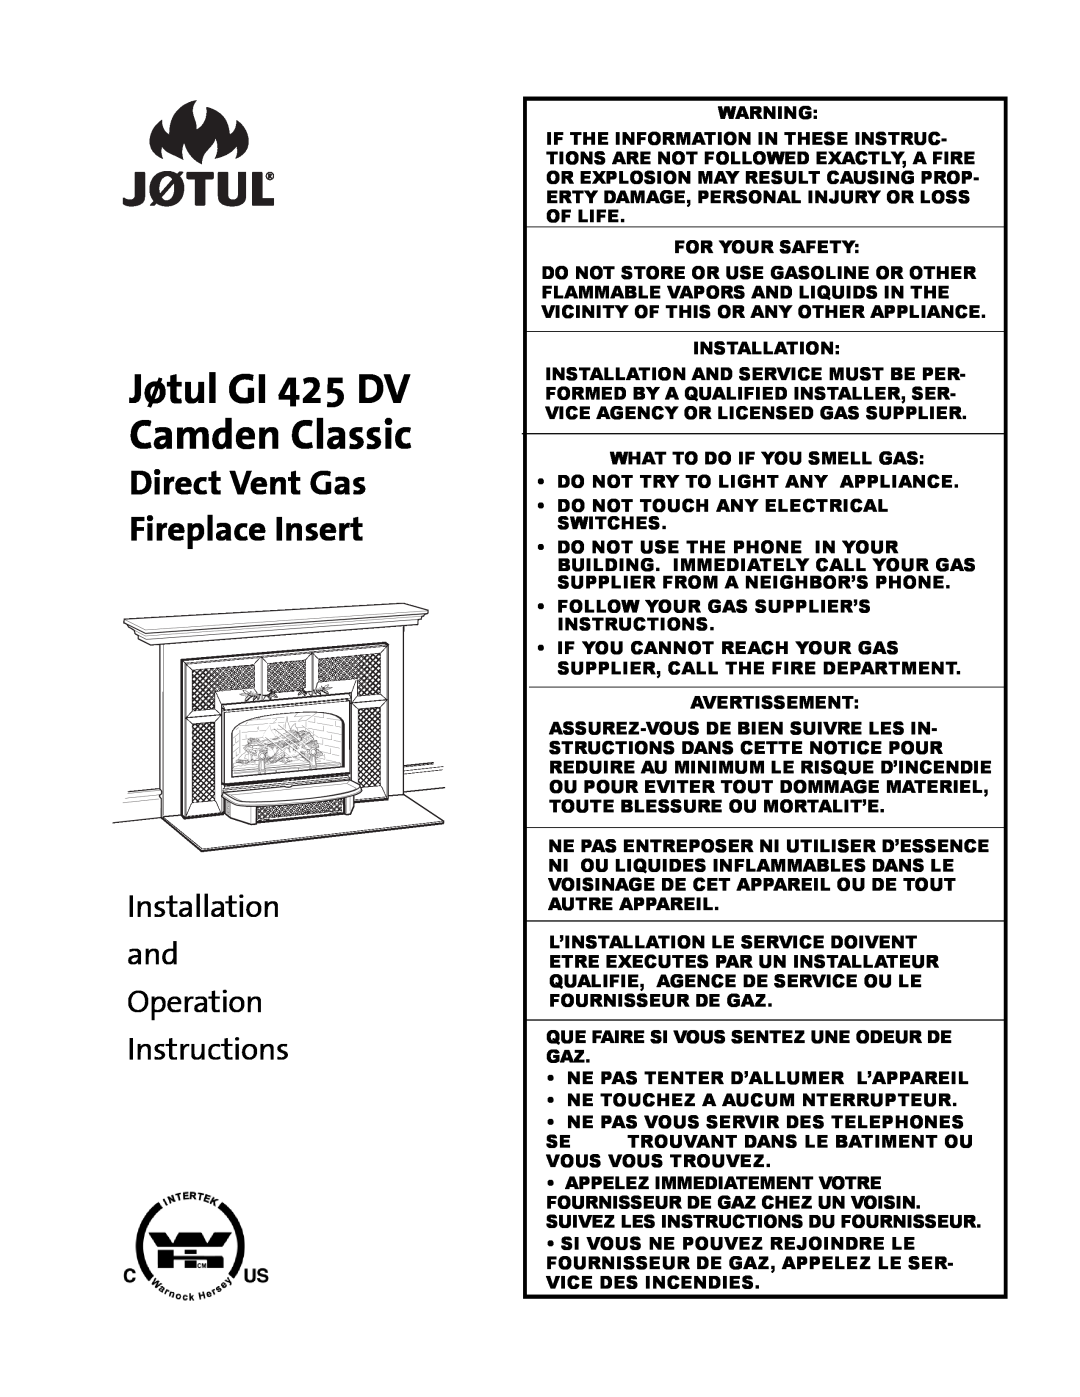 Jotul manual Jøtul GI 425 DV Camden Classic, Direct Vent Gas Fireplace Insert, Installation and Operation Instructions 